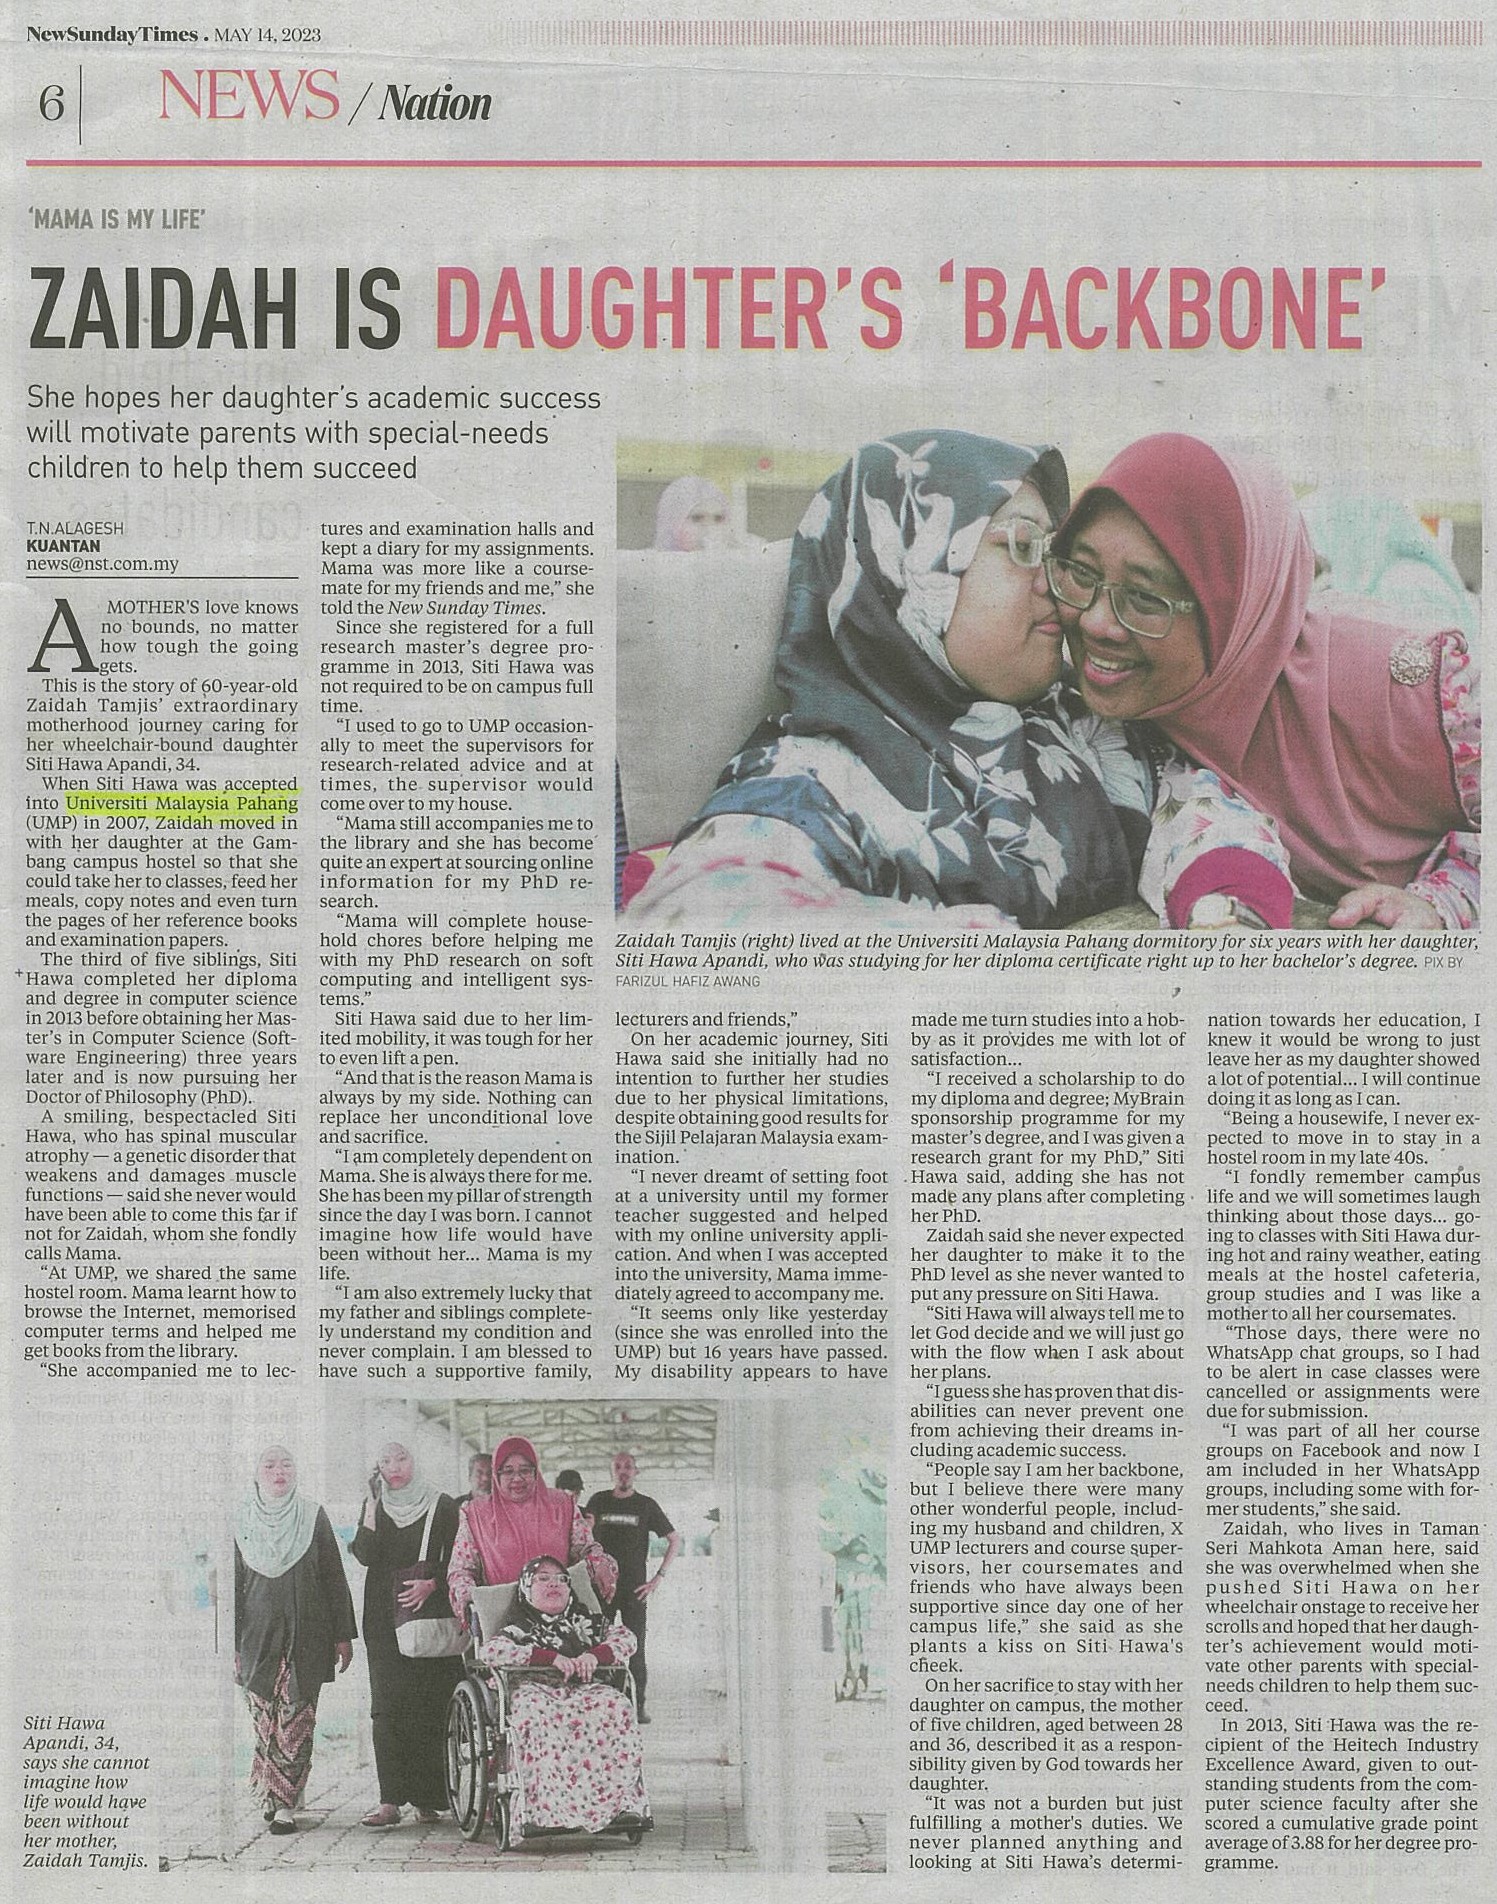 ZAIDAH IS DAUGHTER'S BACKBONE